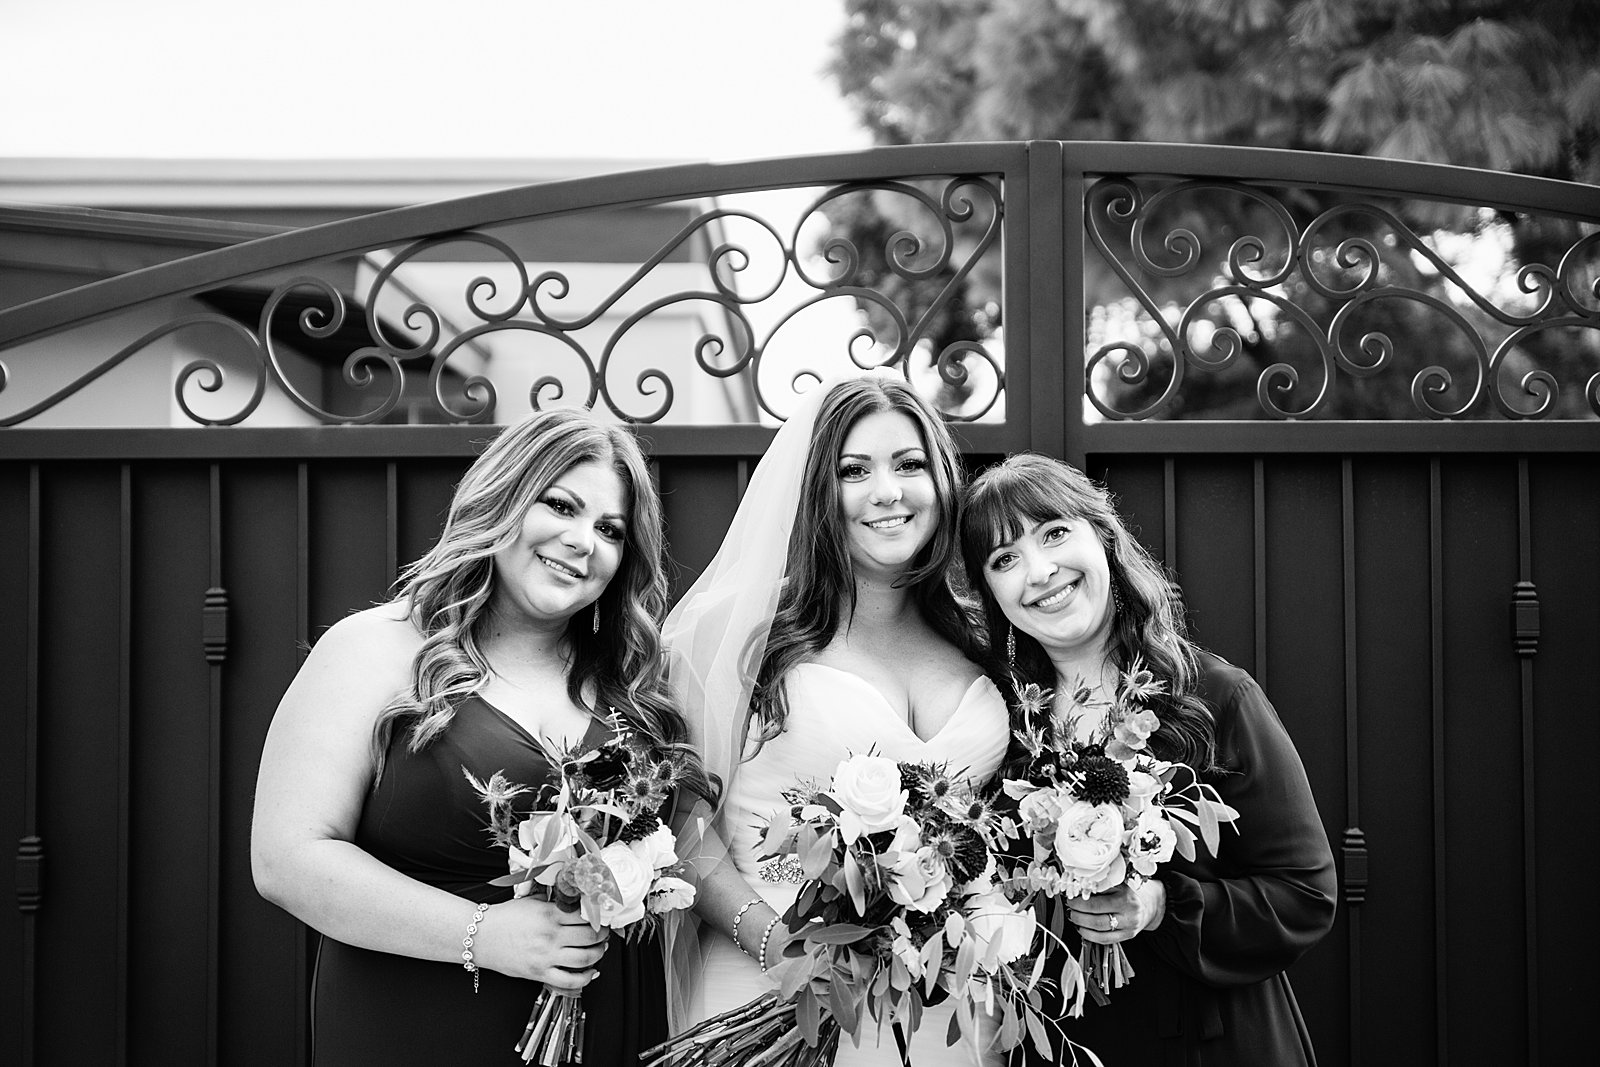 Bride and bridesmaids together at a Arizona backyard wedding by Arizona wedding photographer PMA Photography.